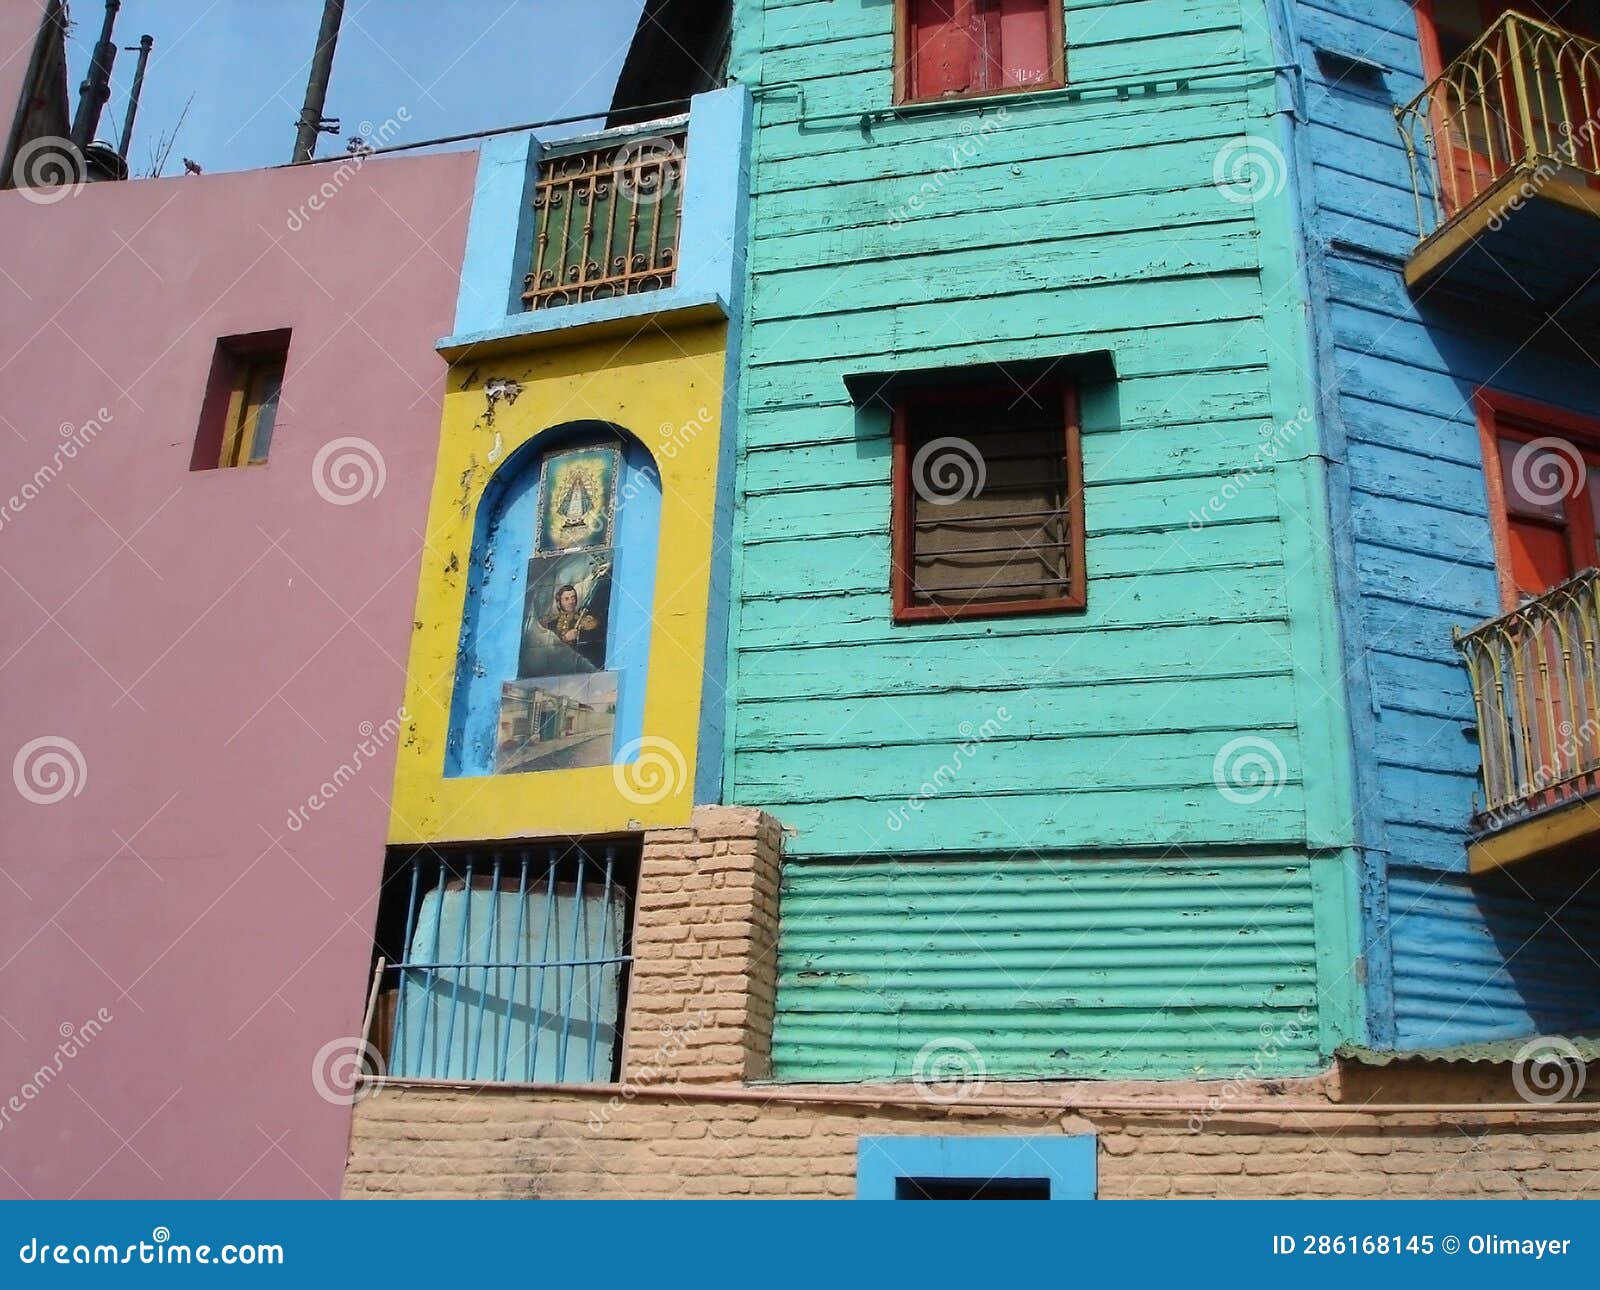 colorful houses in caminito, la boca, buenos aires.